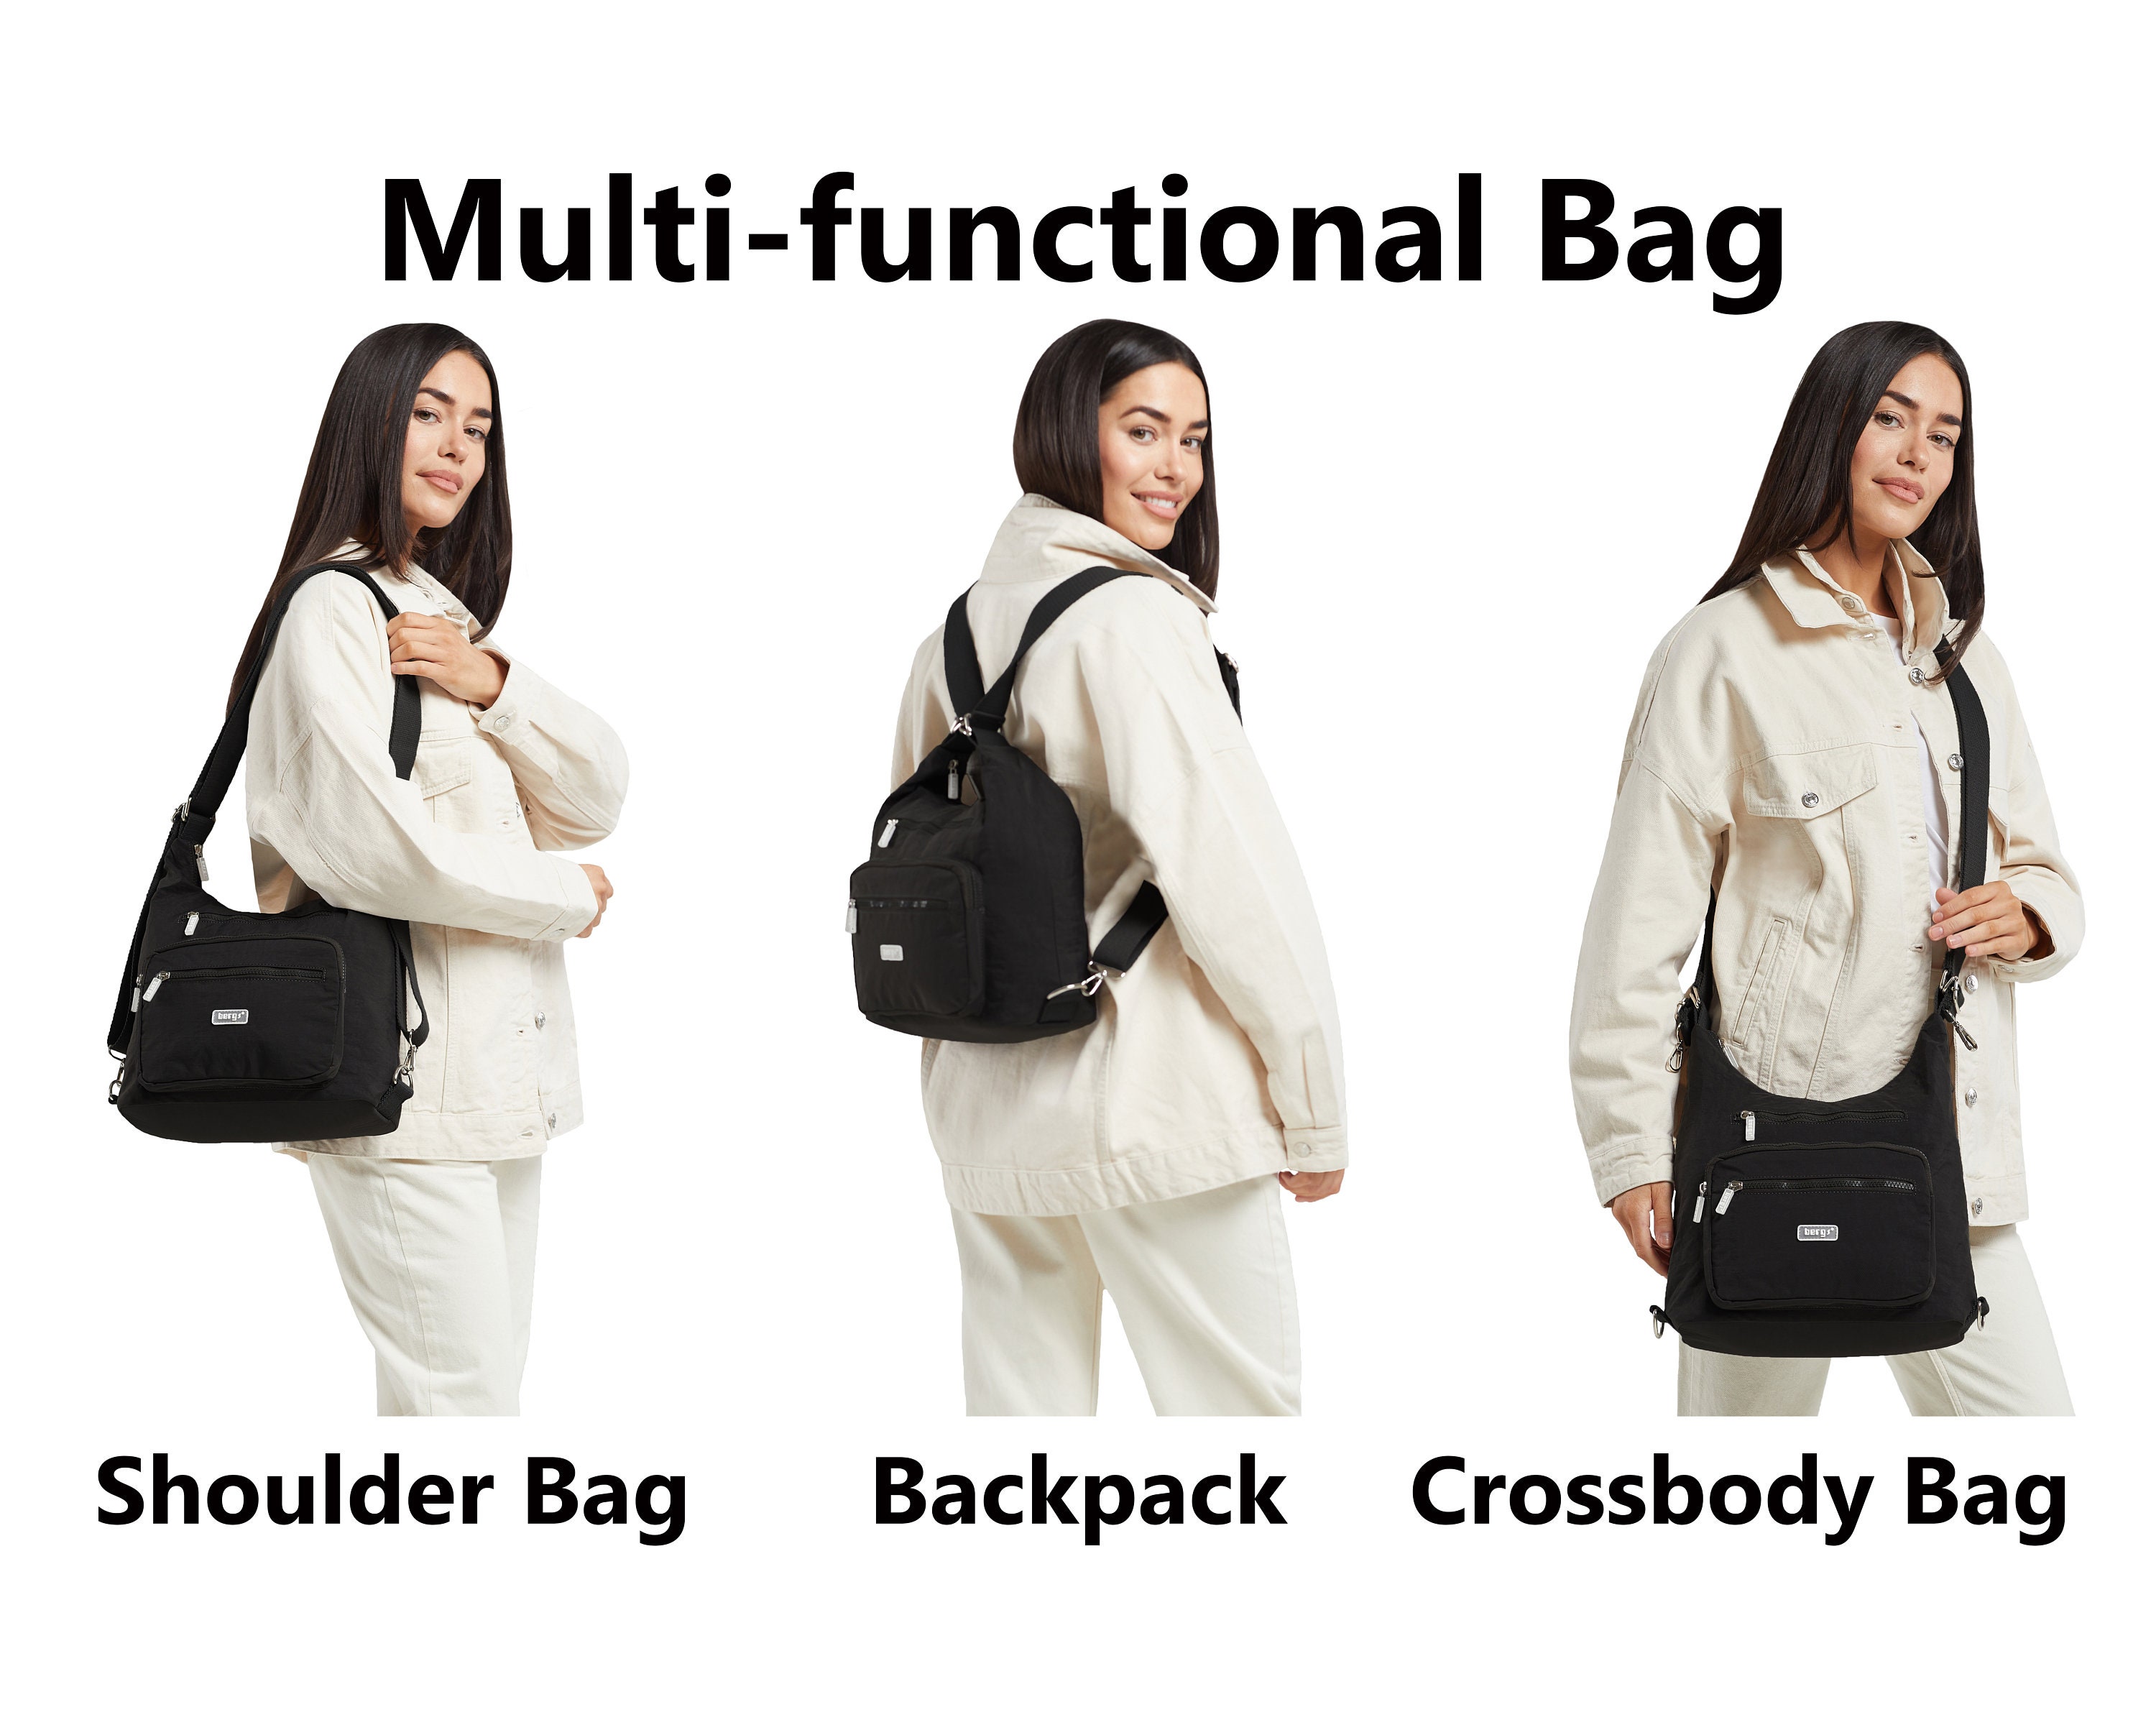 Backpack Shoulder Bag Cross-body Bag All in 1 Nylon 